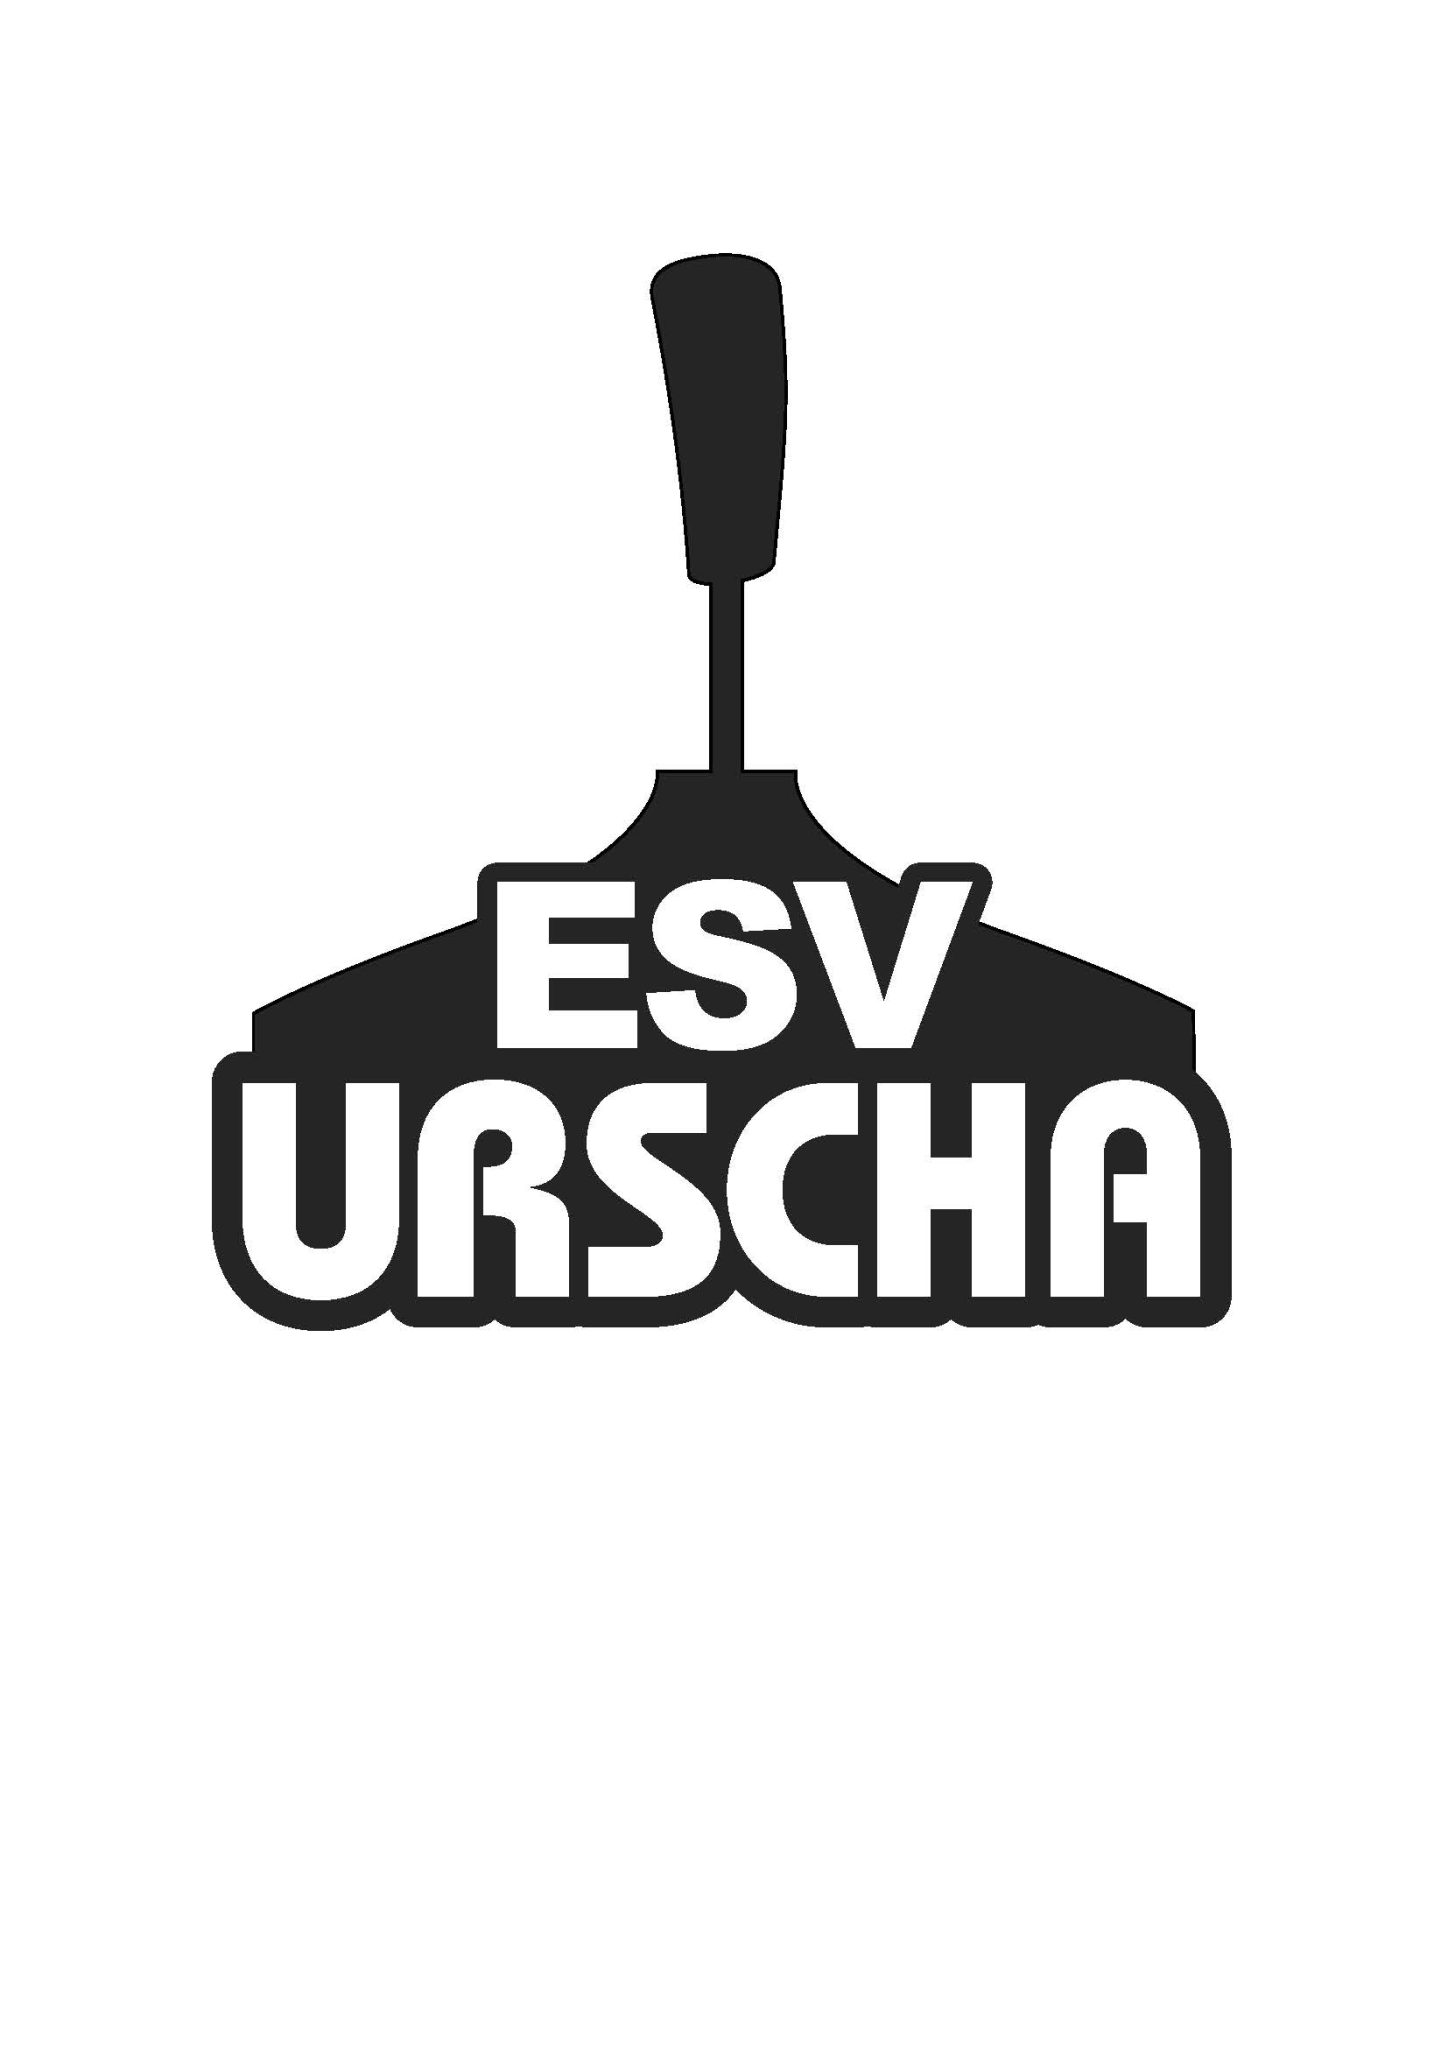 ESV Urscha